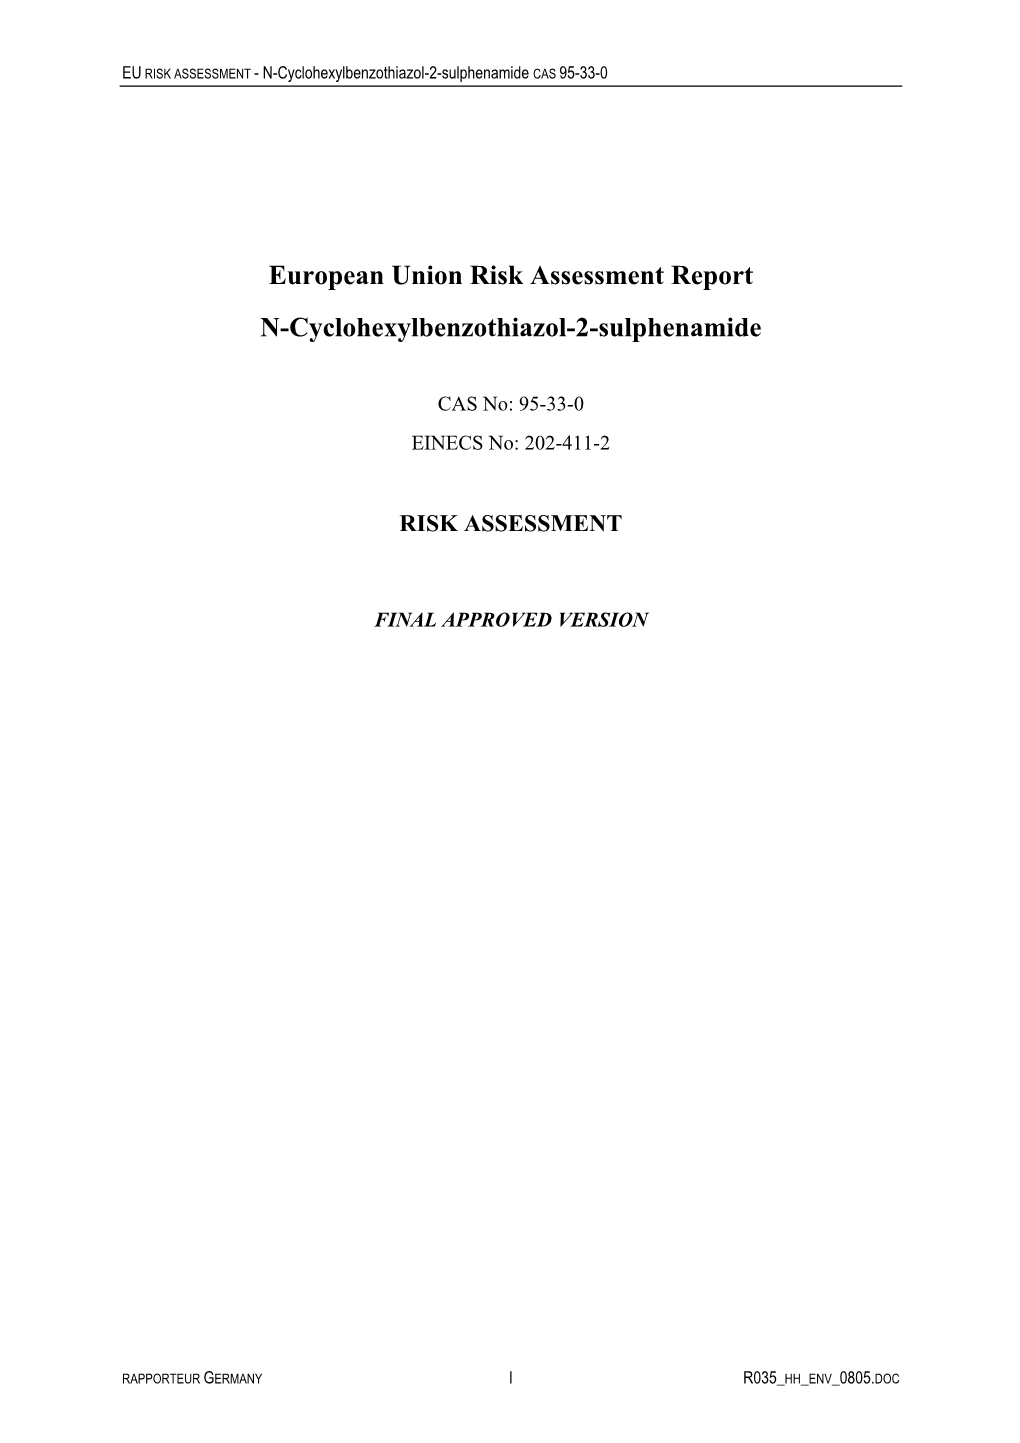 European Union Risk Assessment Report N-Cyclohexylbenzothiazol-2-Sulphenamide